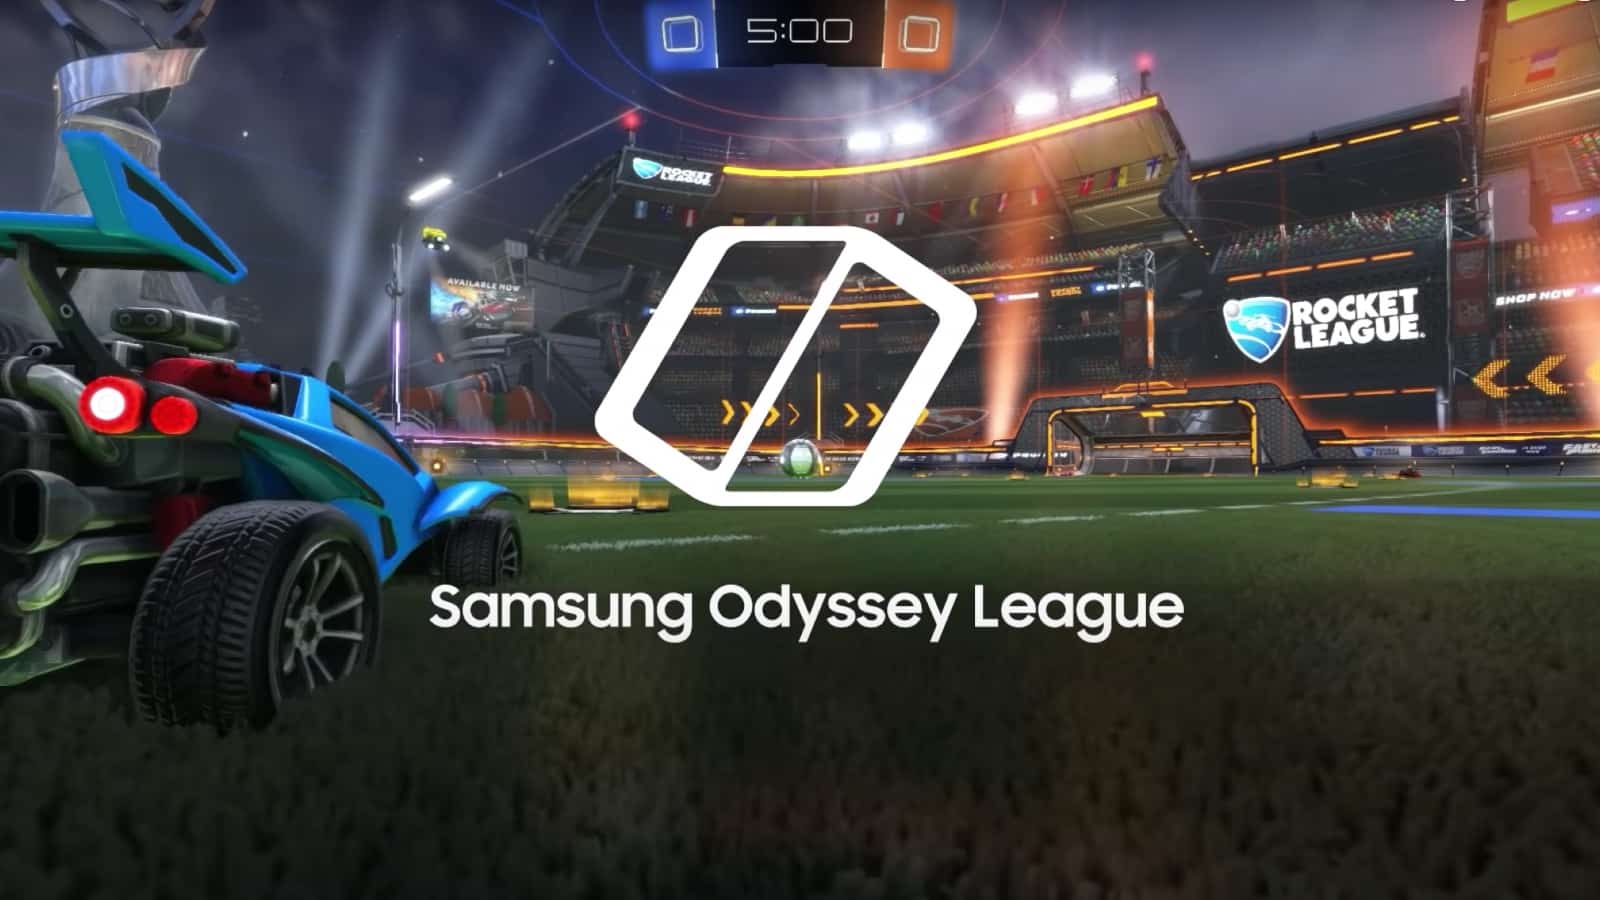 Samsung Odyssey League Rocket League tournament